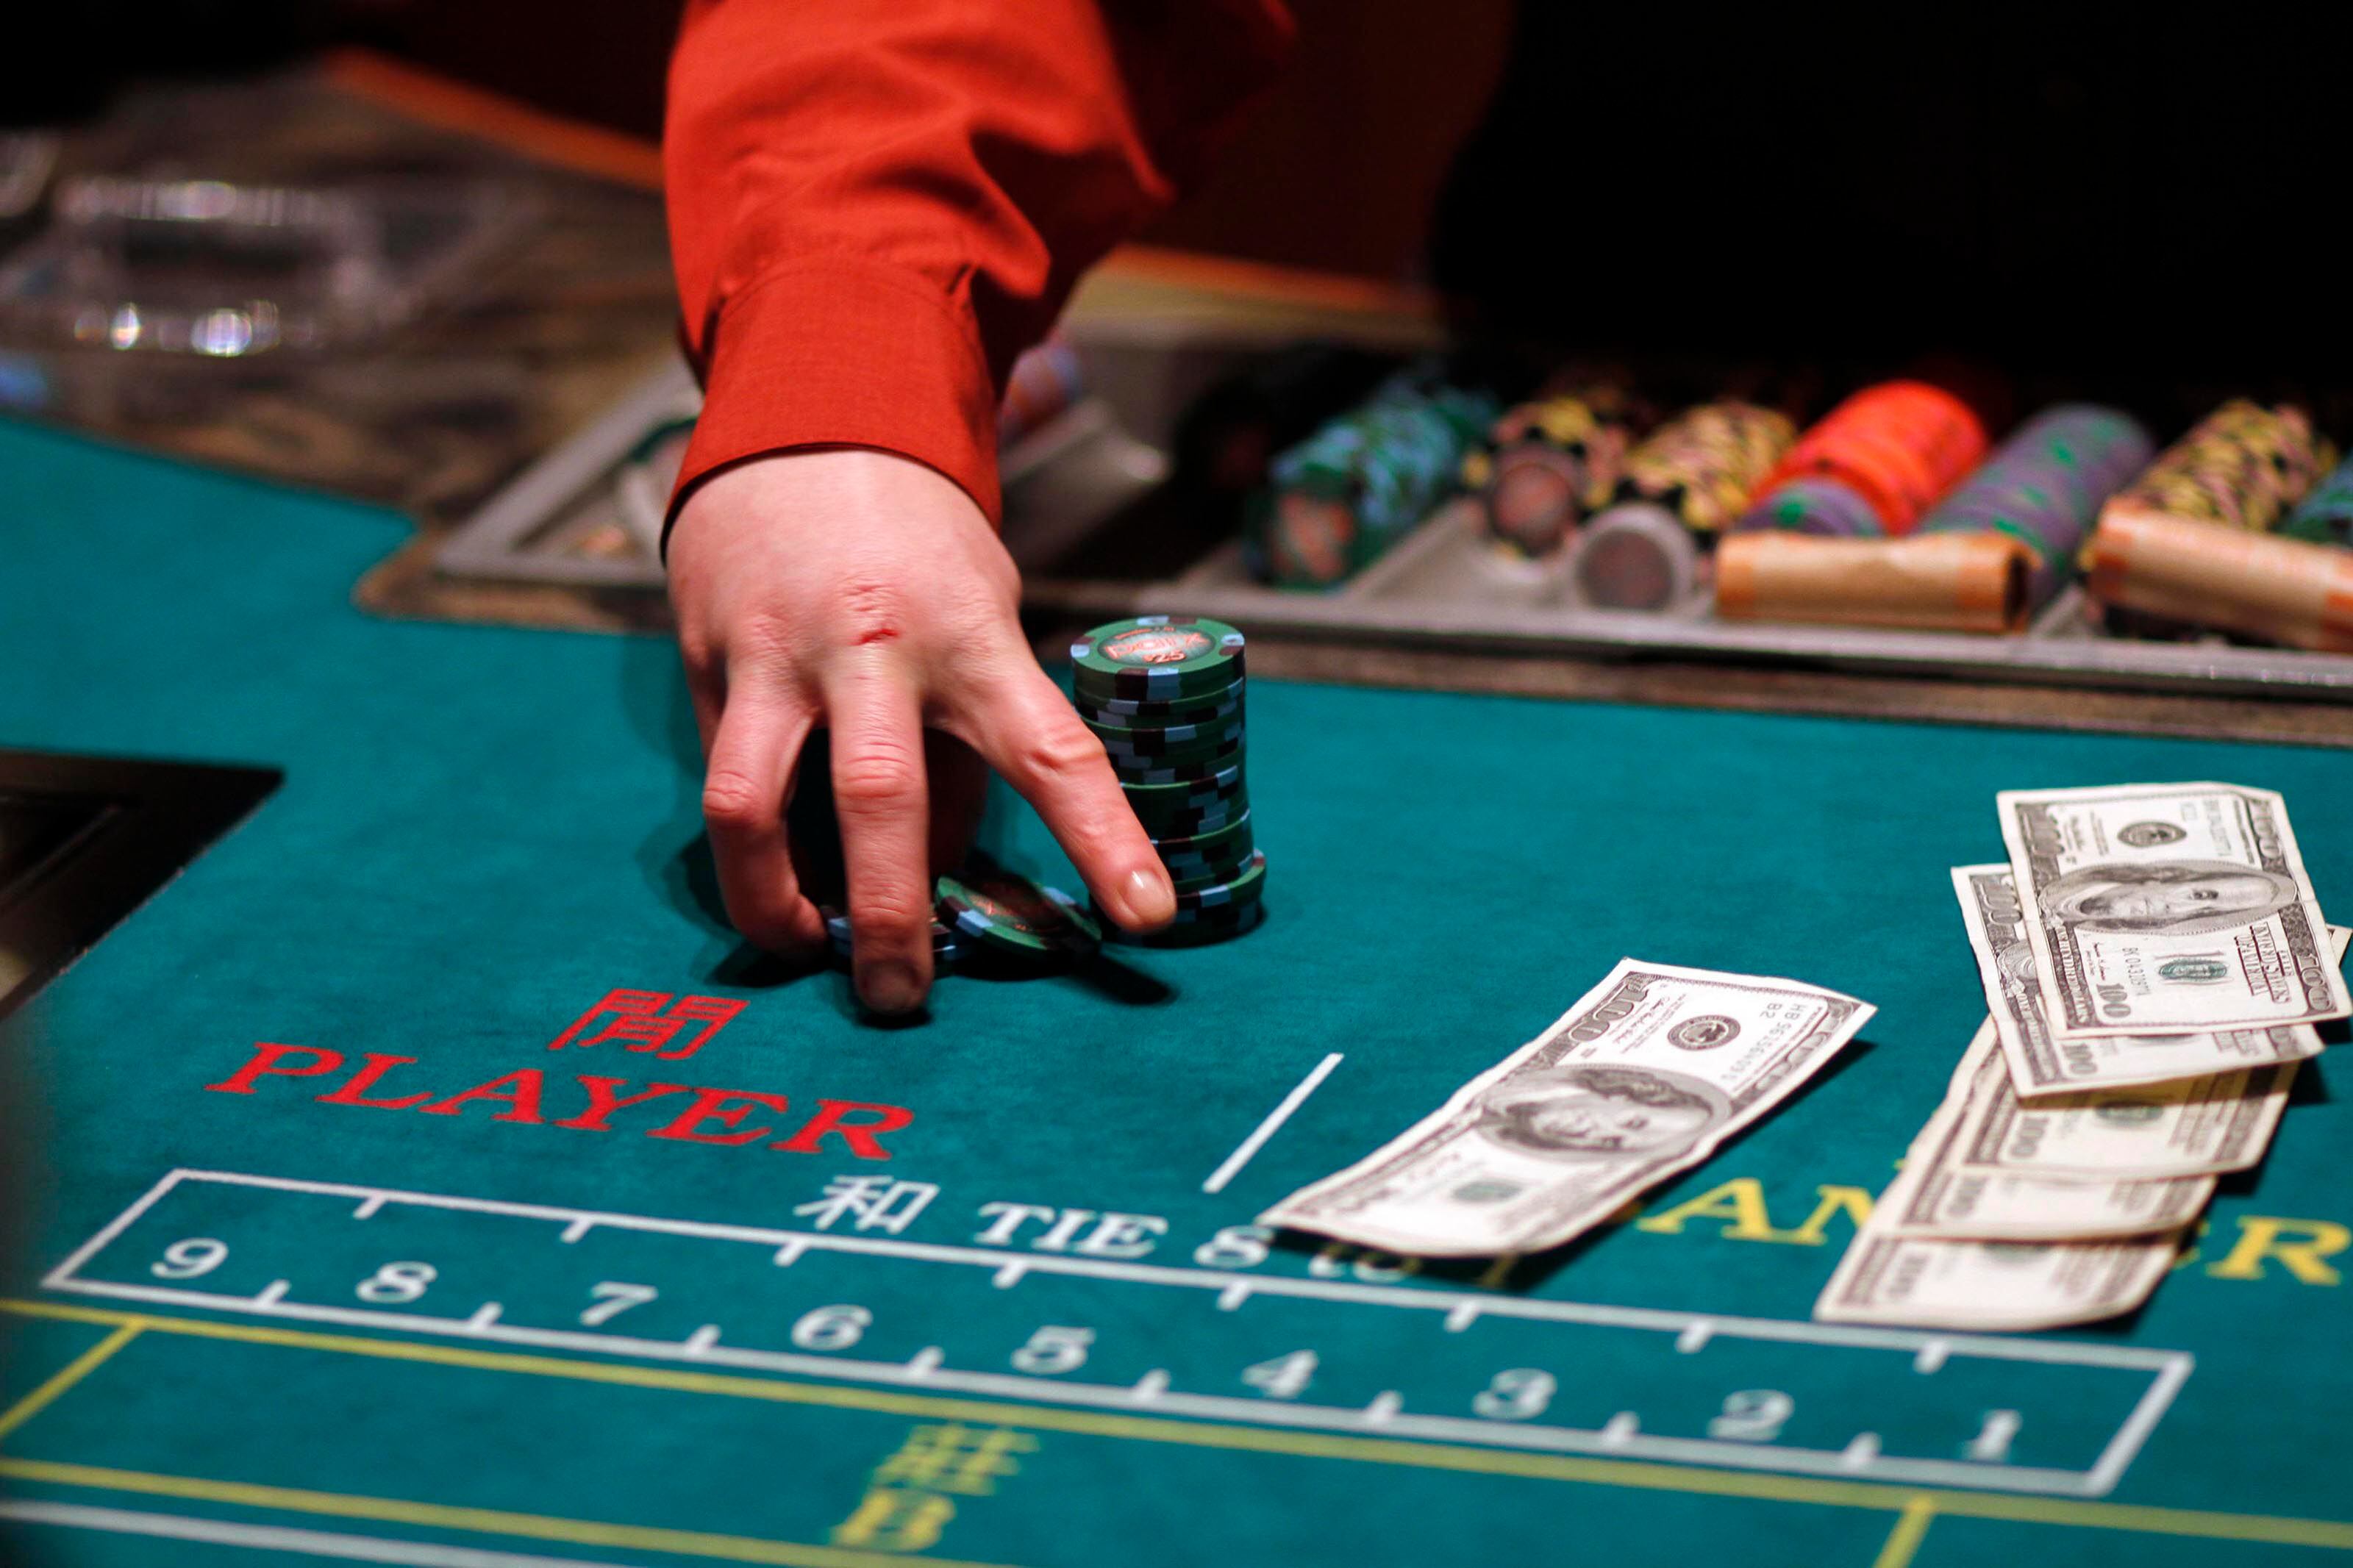 Gambling addiction rises amid COVID pandemic - Los Angeles Times